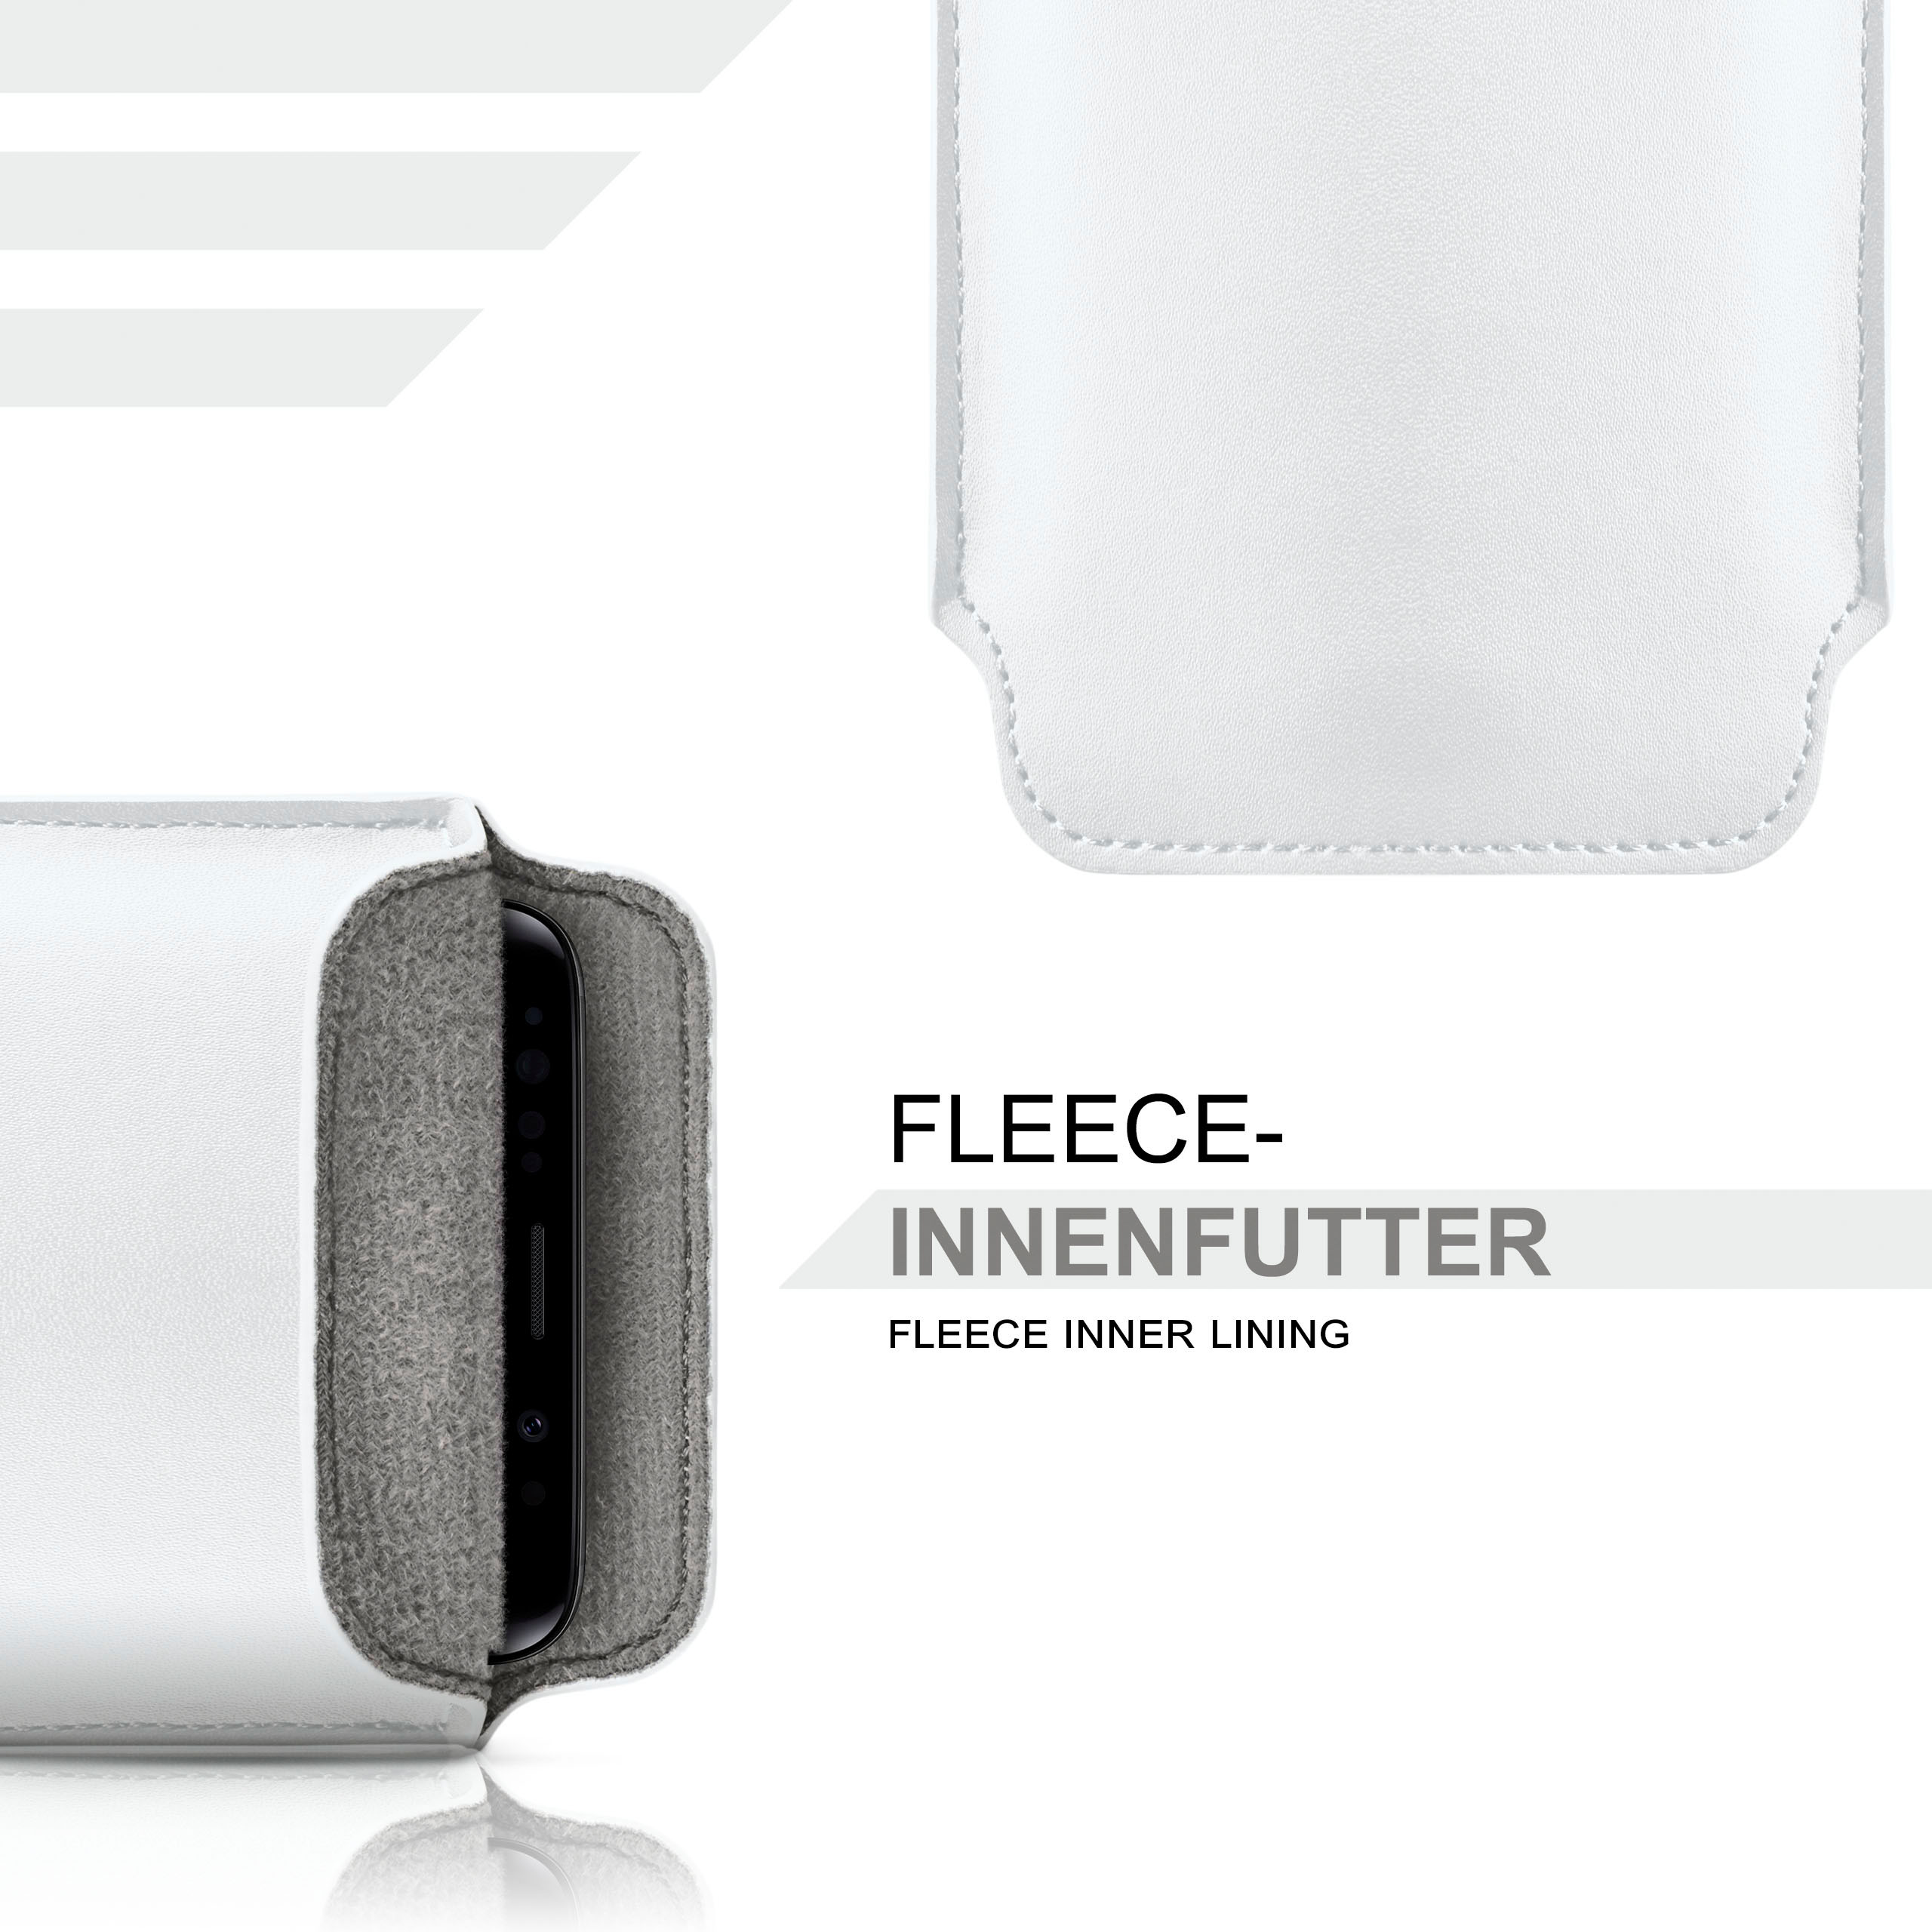 Full Shiny-White Slide M7, MOEX One Case, Cover, HTC,